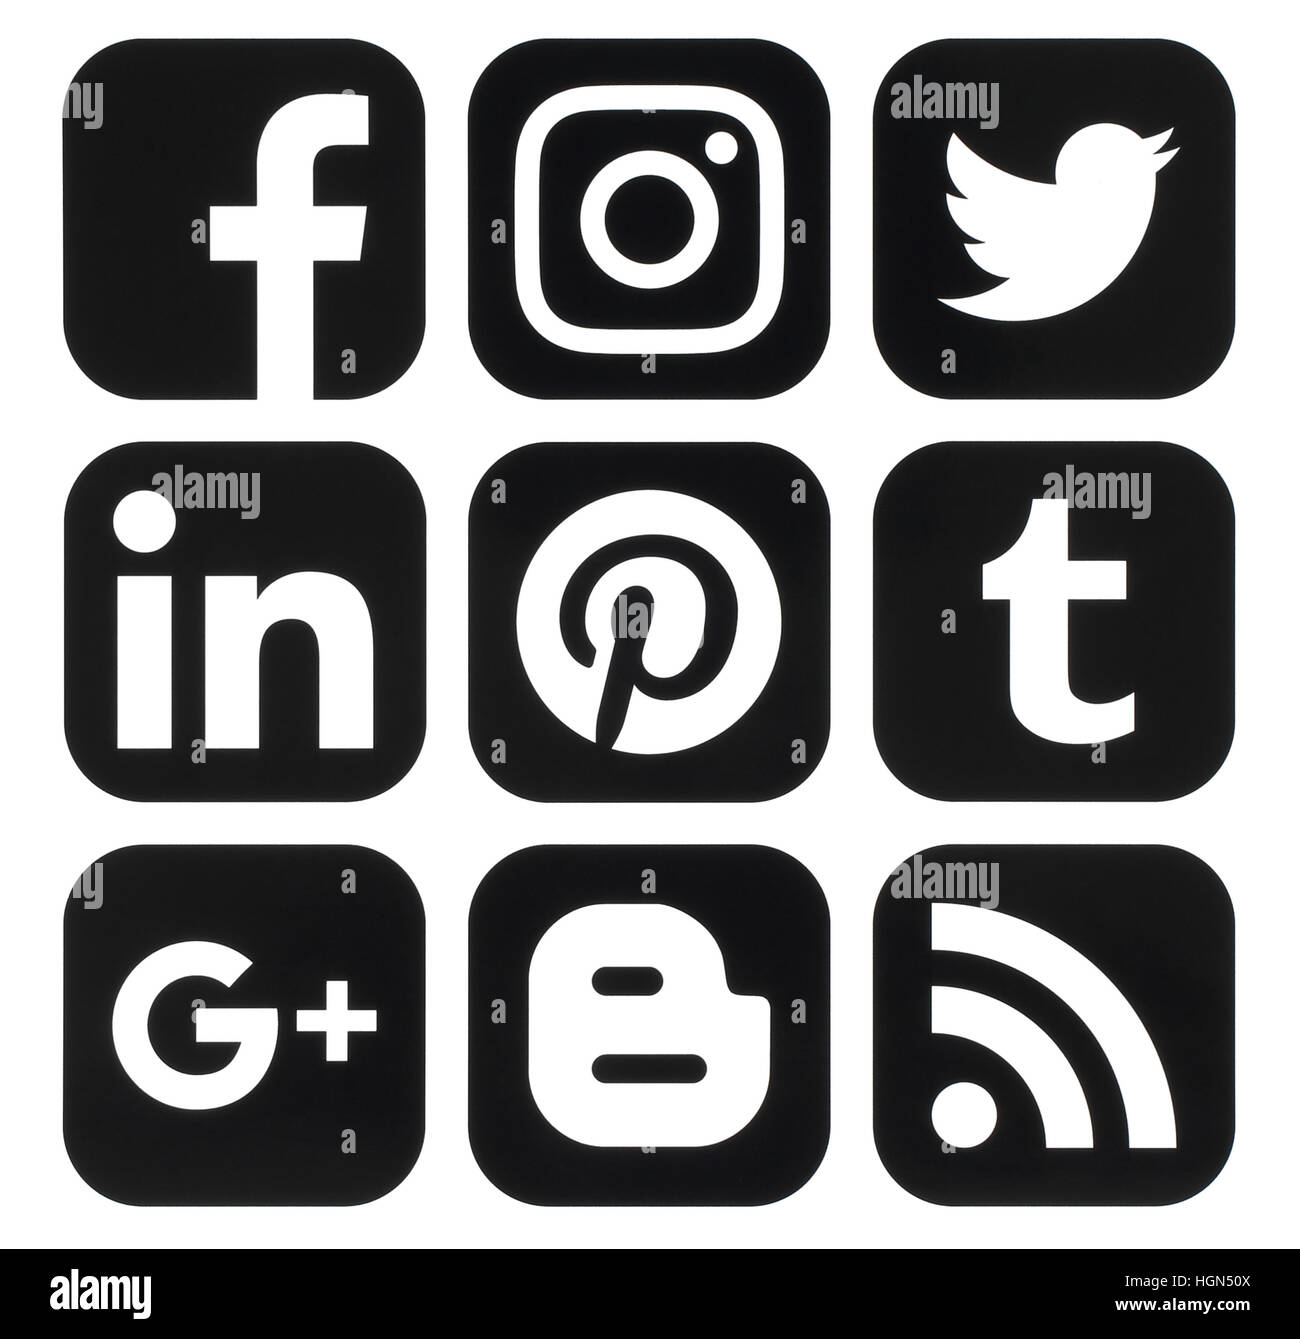 Kiev, Ucraina - 09 agosto 2016: Raccolta di nero popolare social media logo stampato su carta: Facebook, Twitter, Google Plus, Instagram, Pinterest Foto Stock